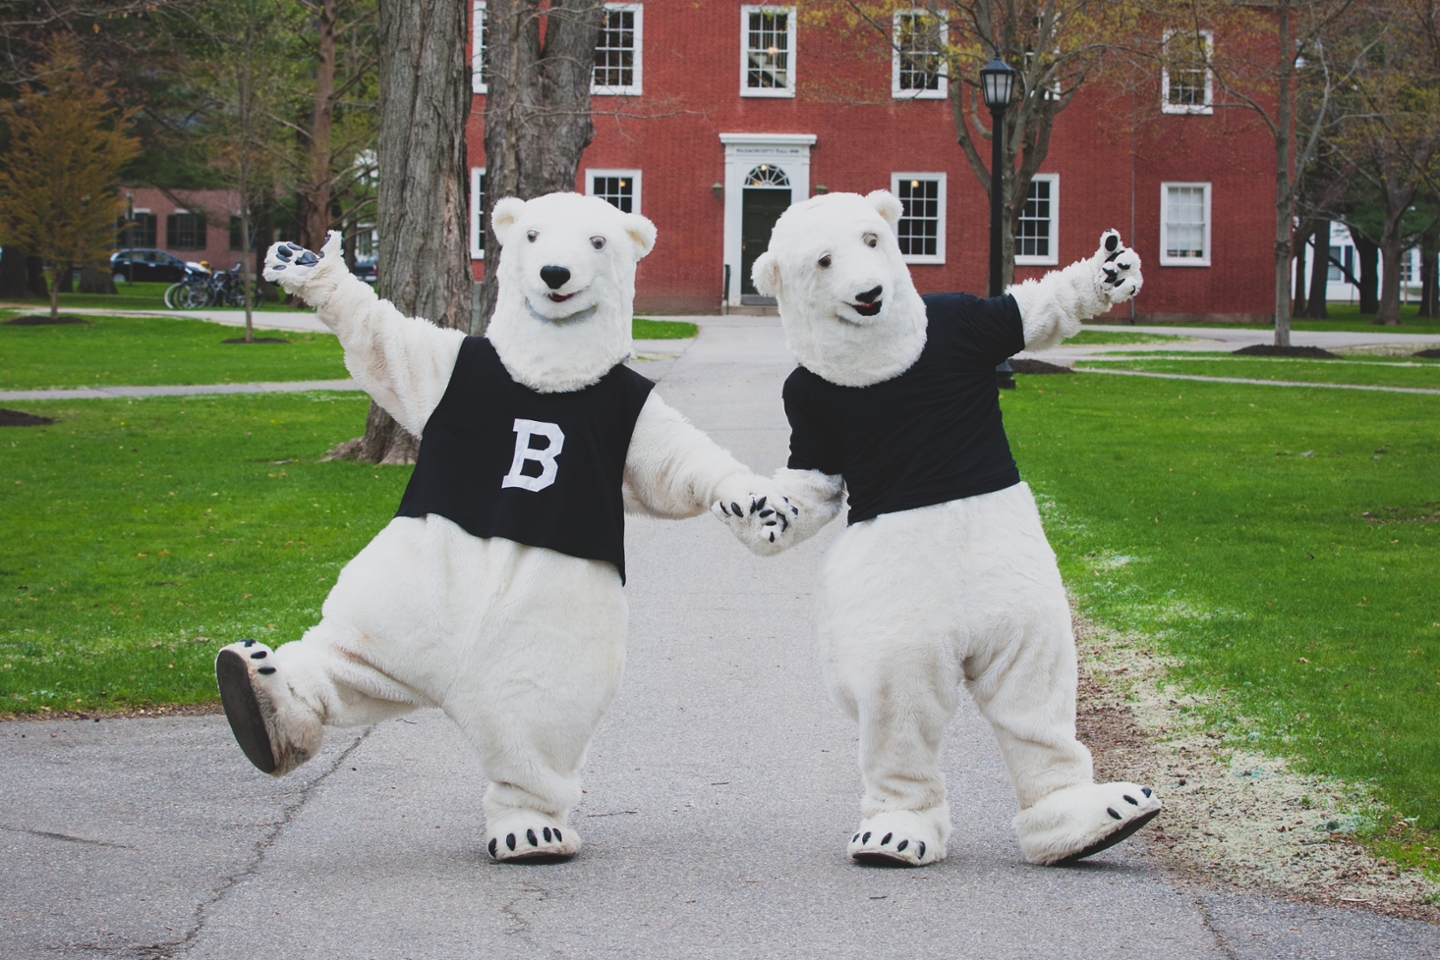 Two polar bear mascots holding hands